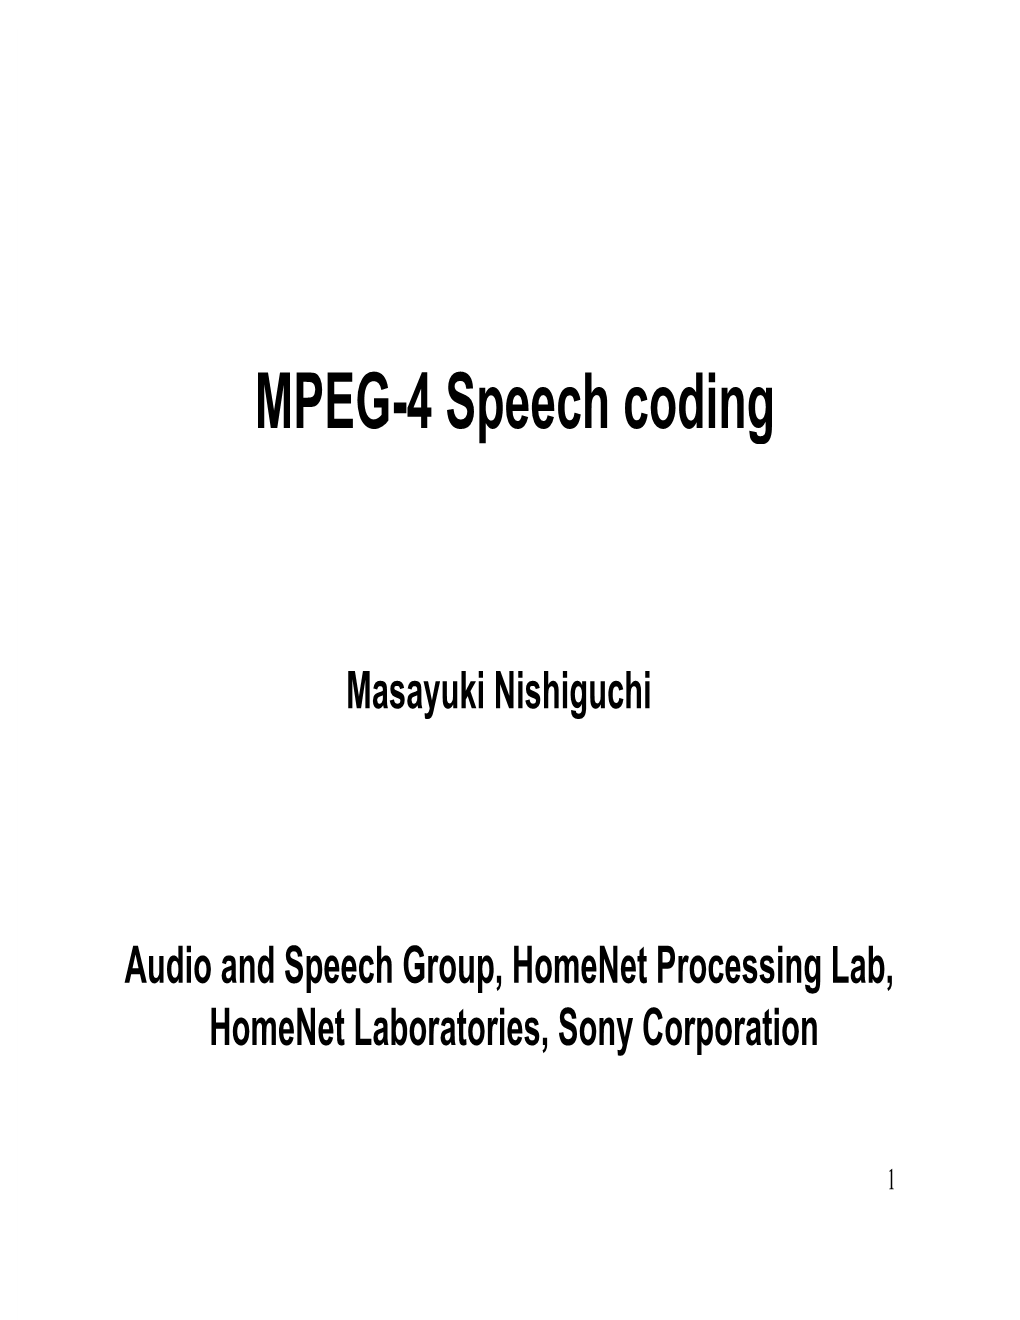 MPEG-4 Speech Coding